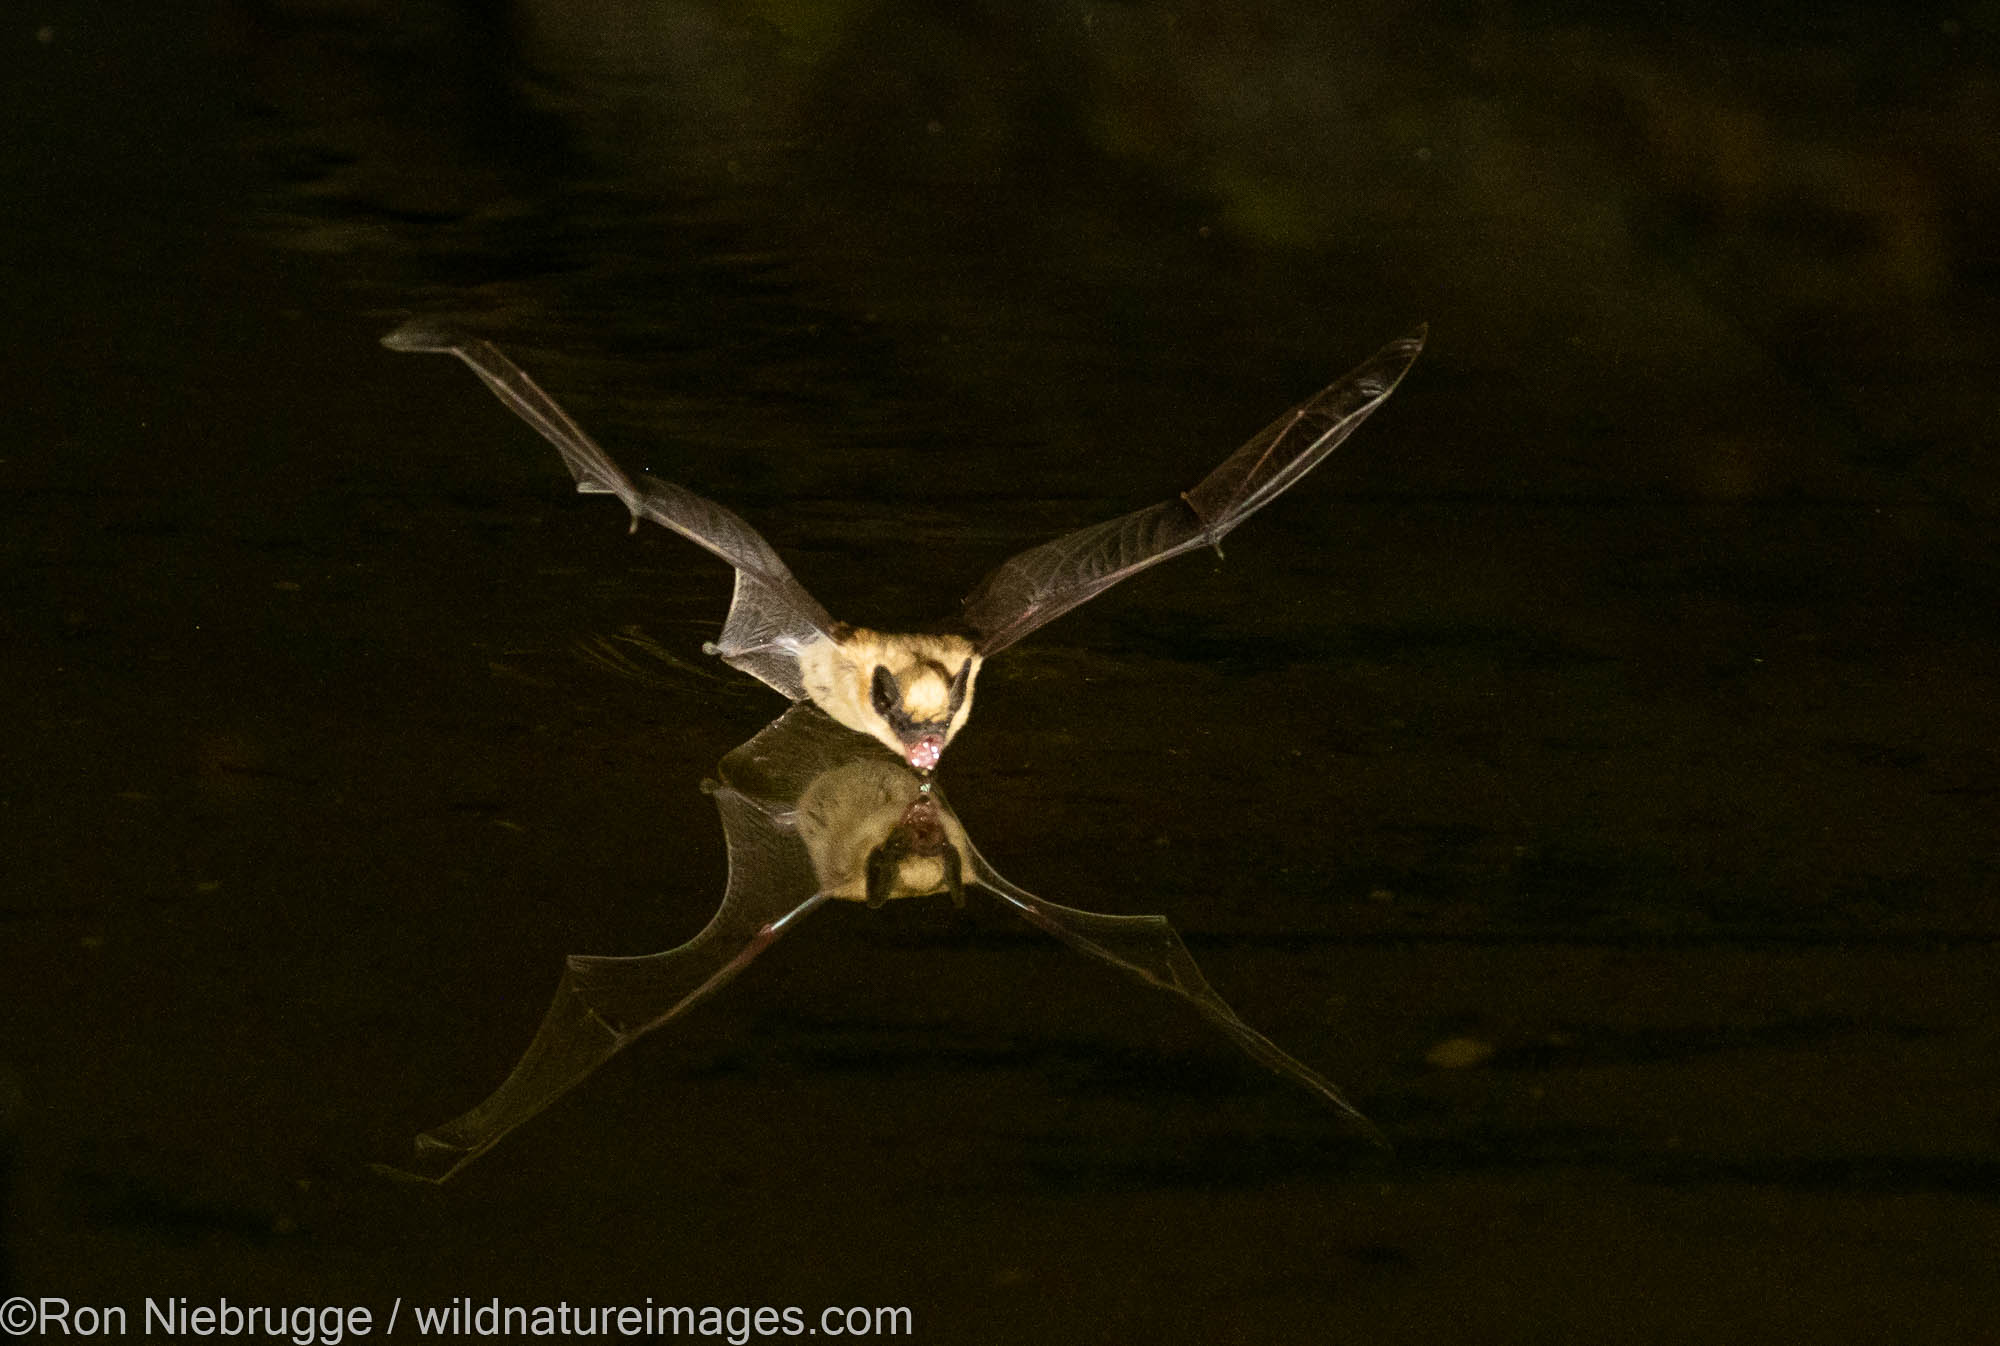 Bat in flight, Marana, near Tucson, Arizona.